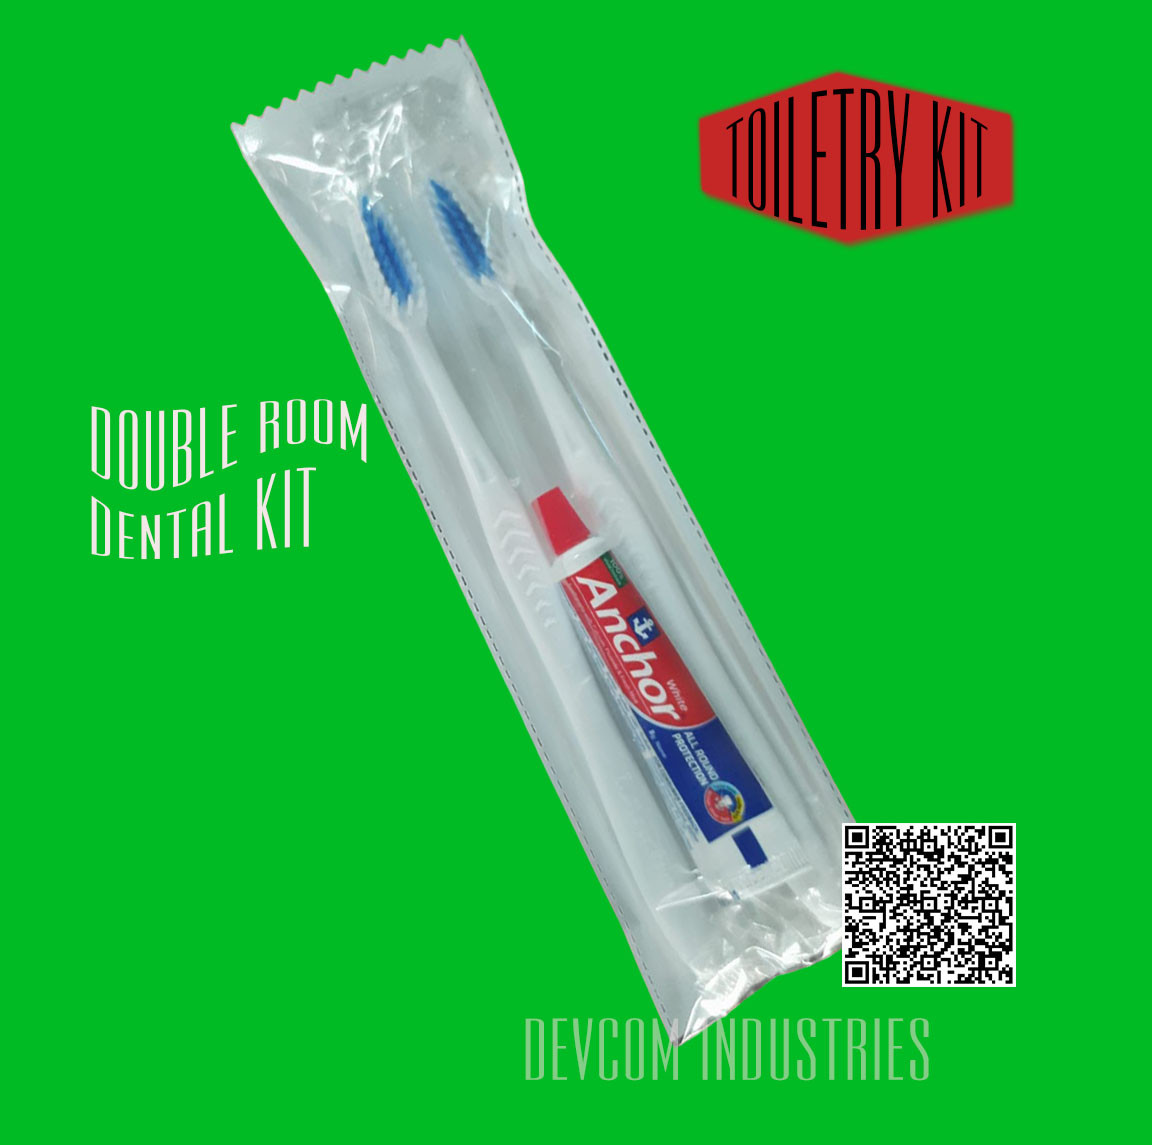 Dual-dental-kit-Double room dental kit 30 sets-Double-Dental for Hotels